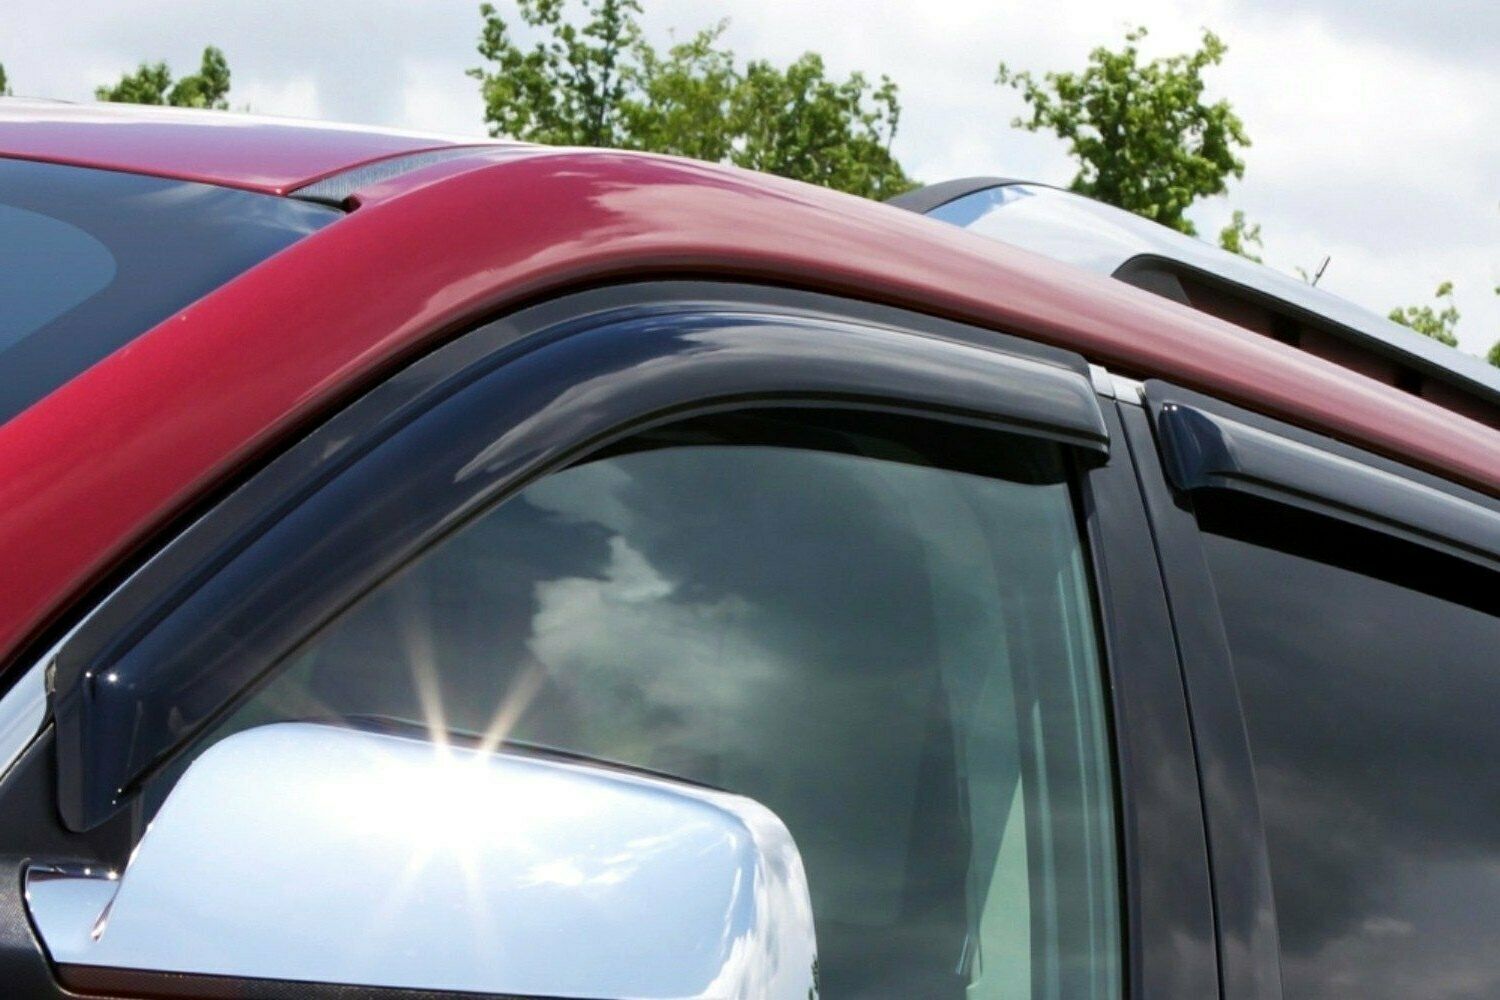 AVS In-Channel Smoke Side Window Deflectors For Lincoln Town Car 90-94 - 94214